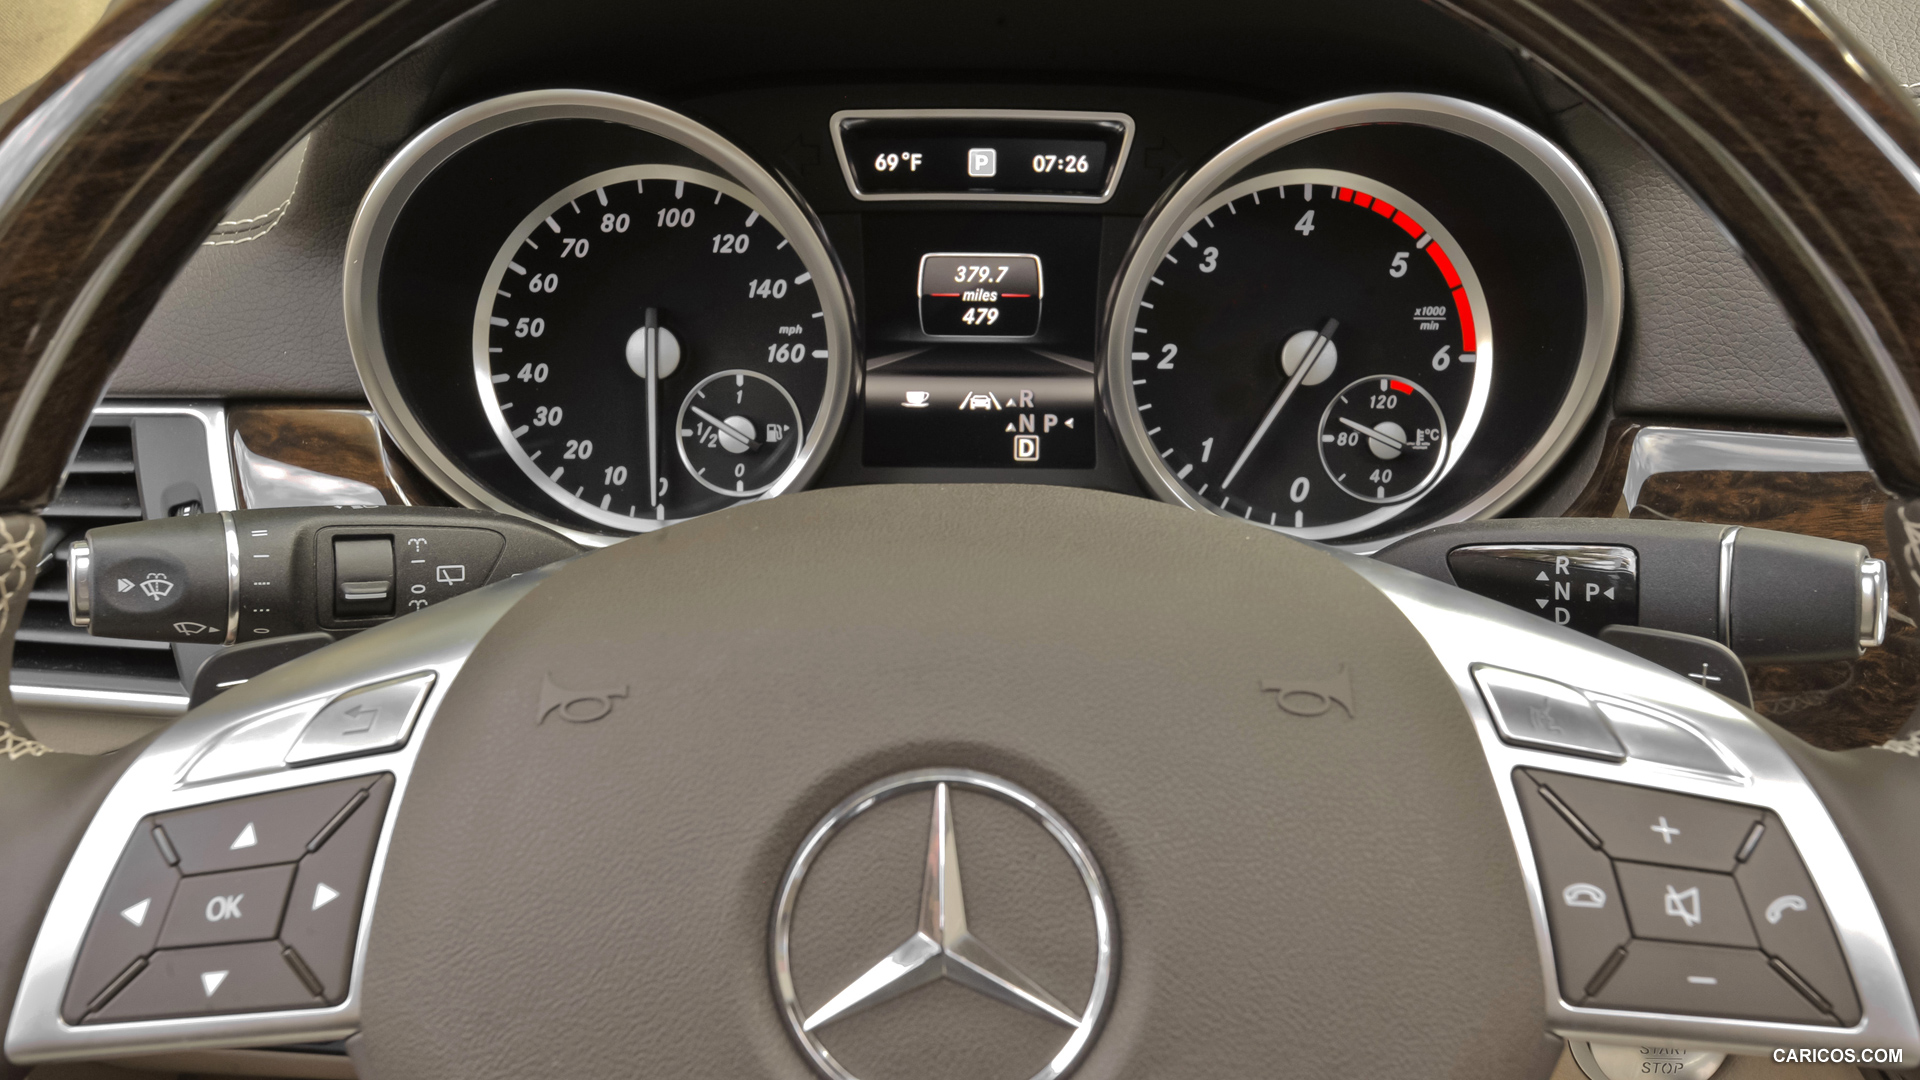 2013 Mercedes-Benz GL-Class Instrument Cluster - , #69 of 259